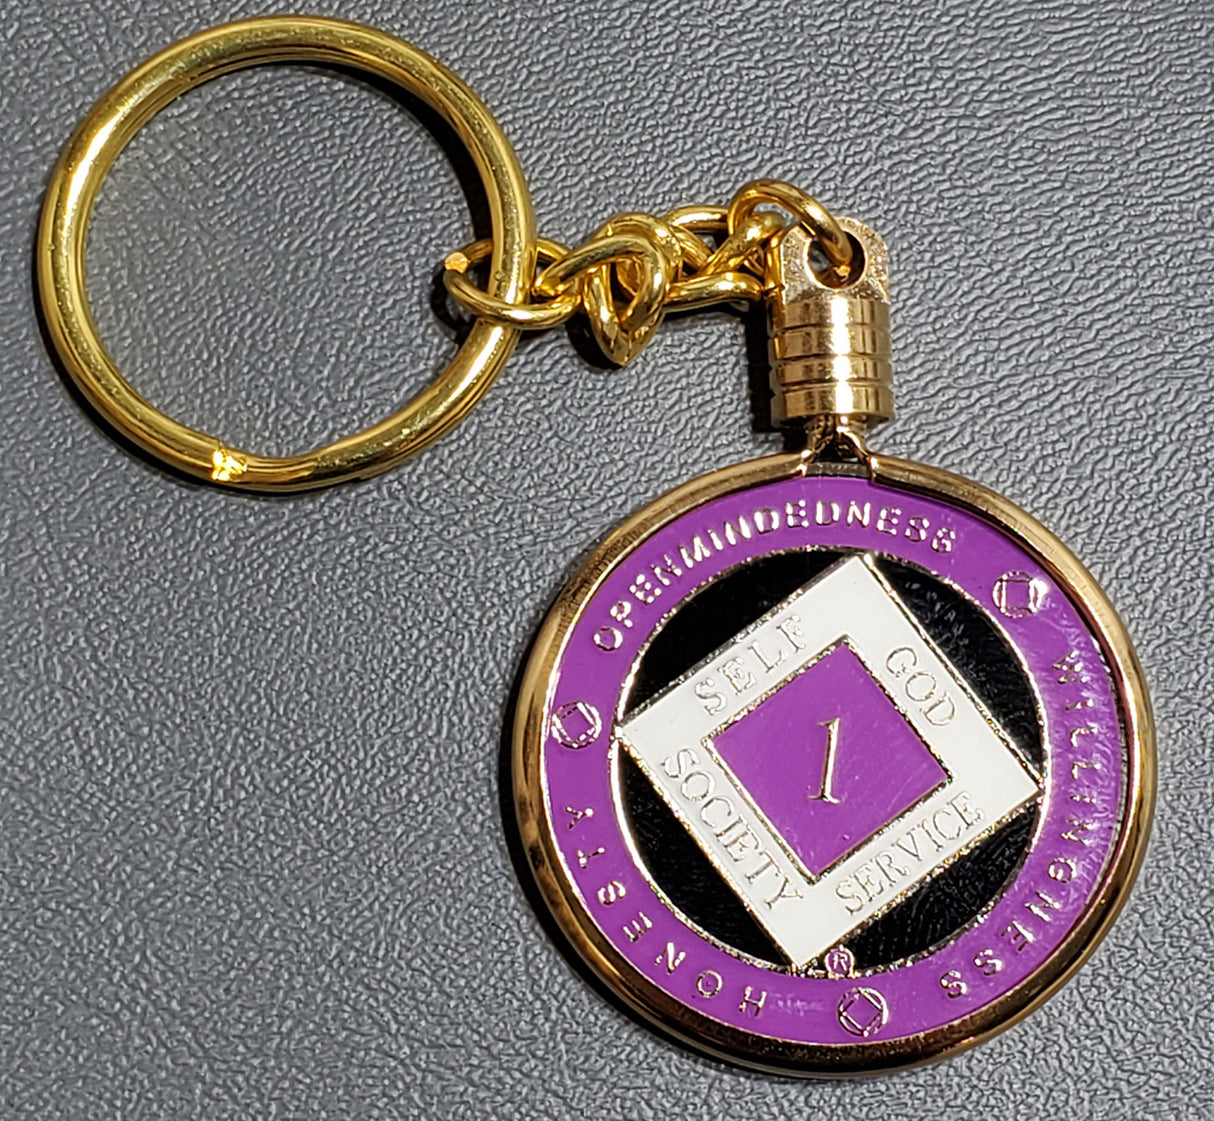 mhkt- Key Chain Medallion Holder w/ Chain